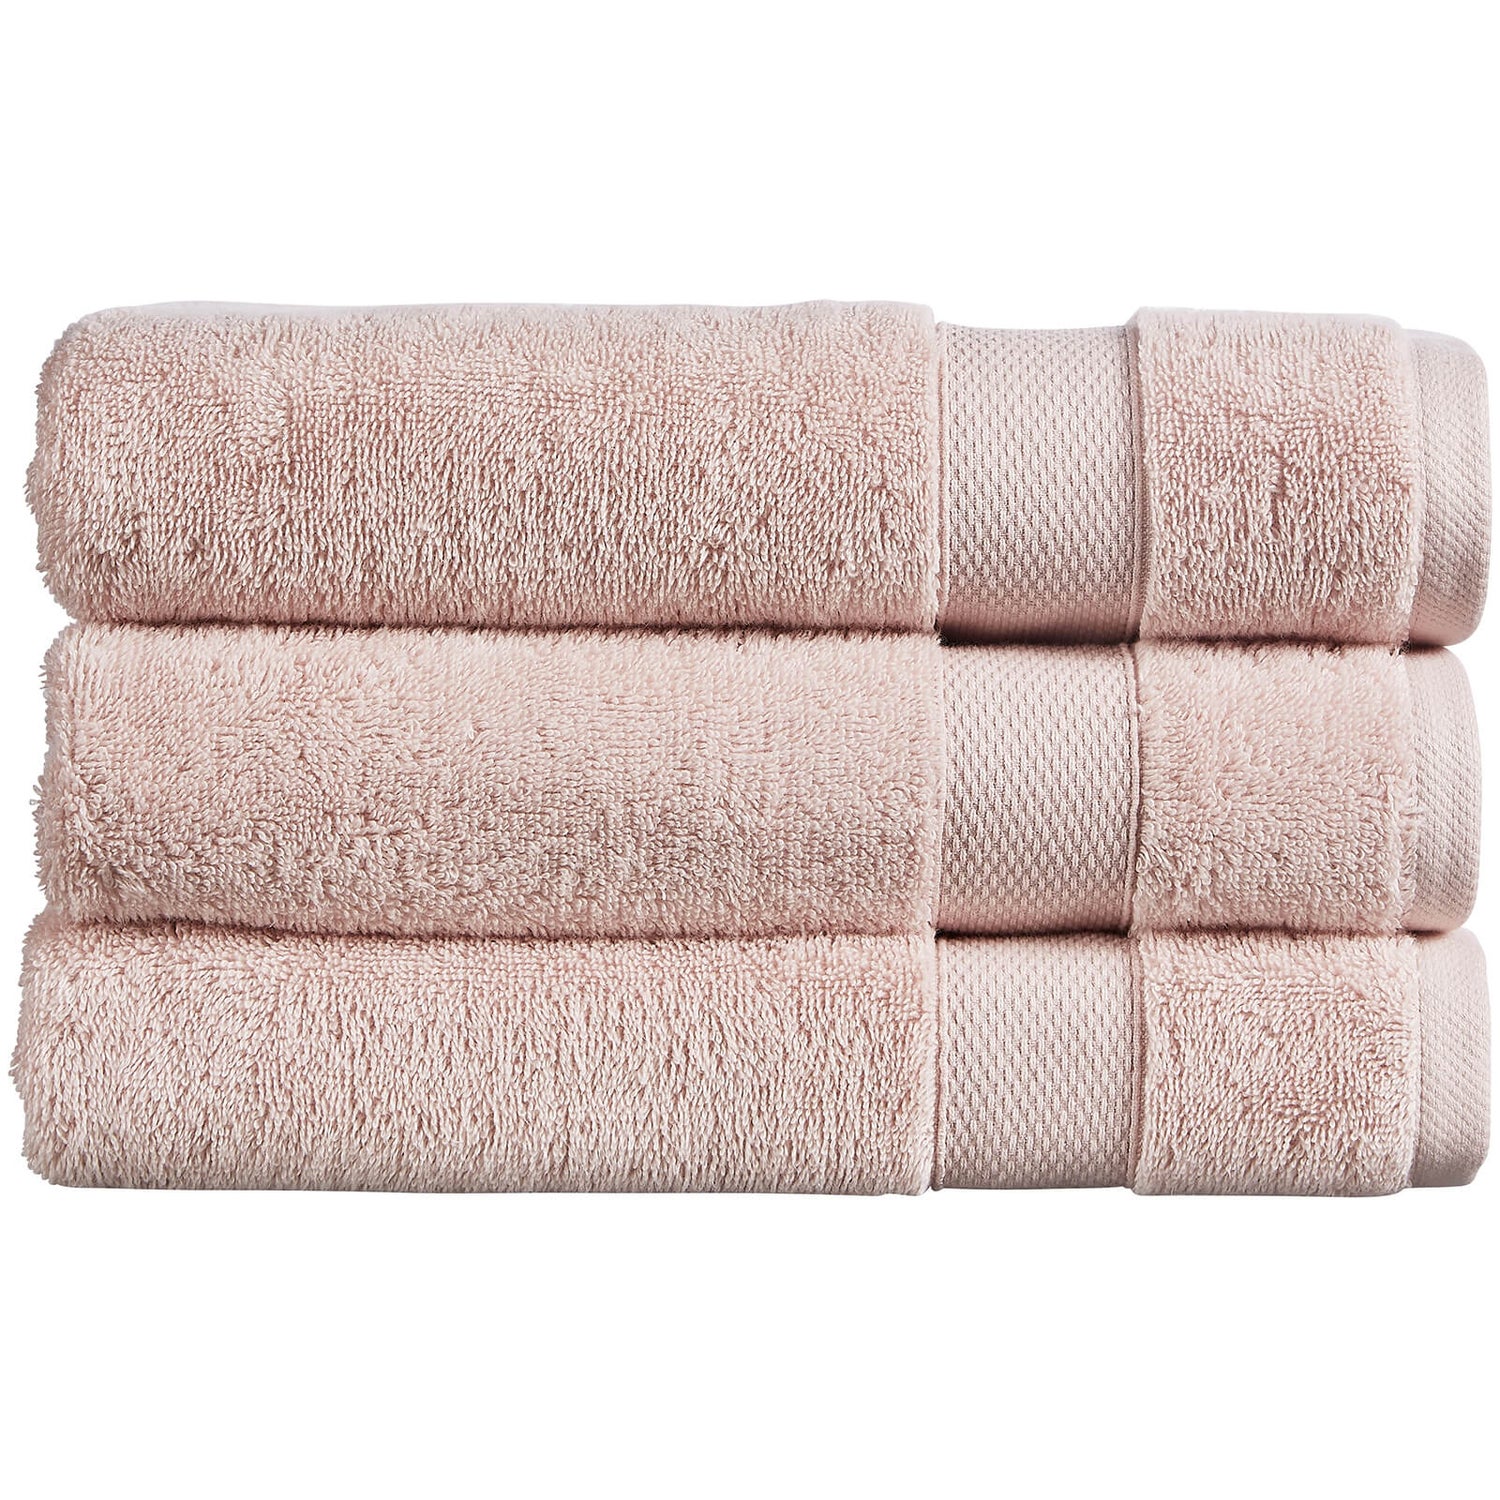 Christy Refresh Bath Towel - Set of 4 - Dusty Pink